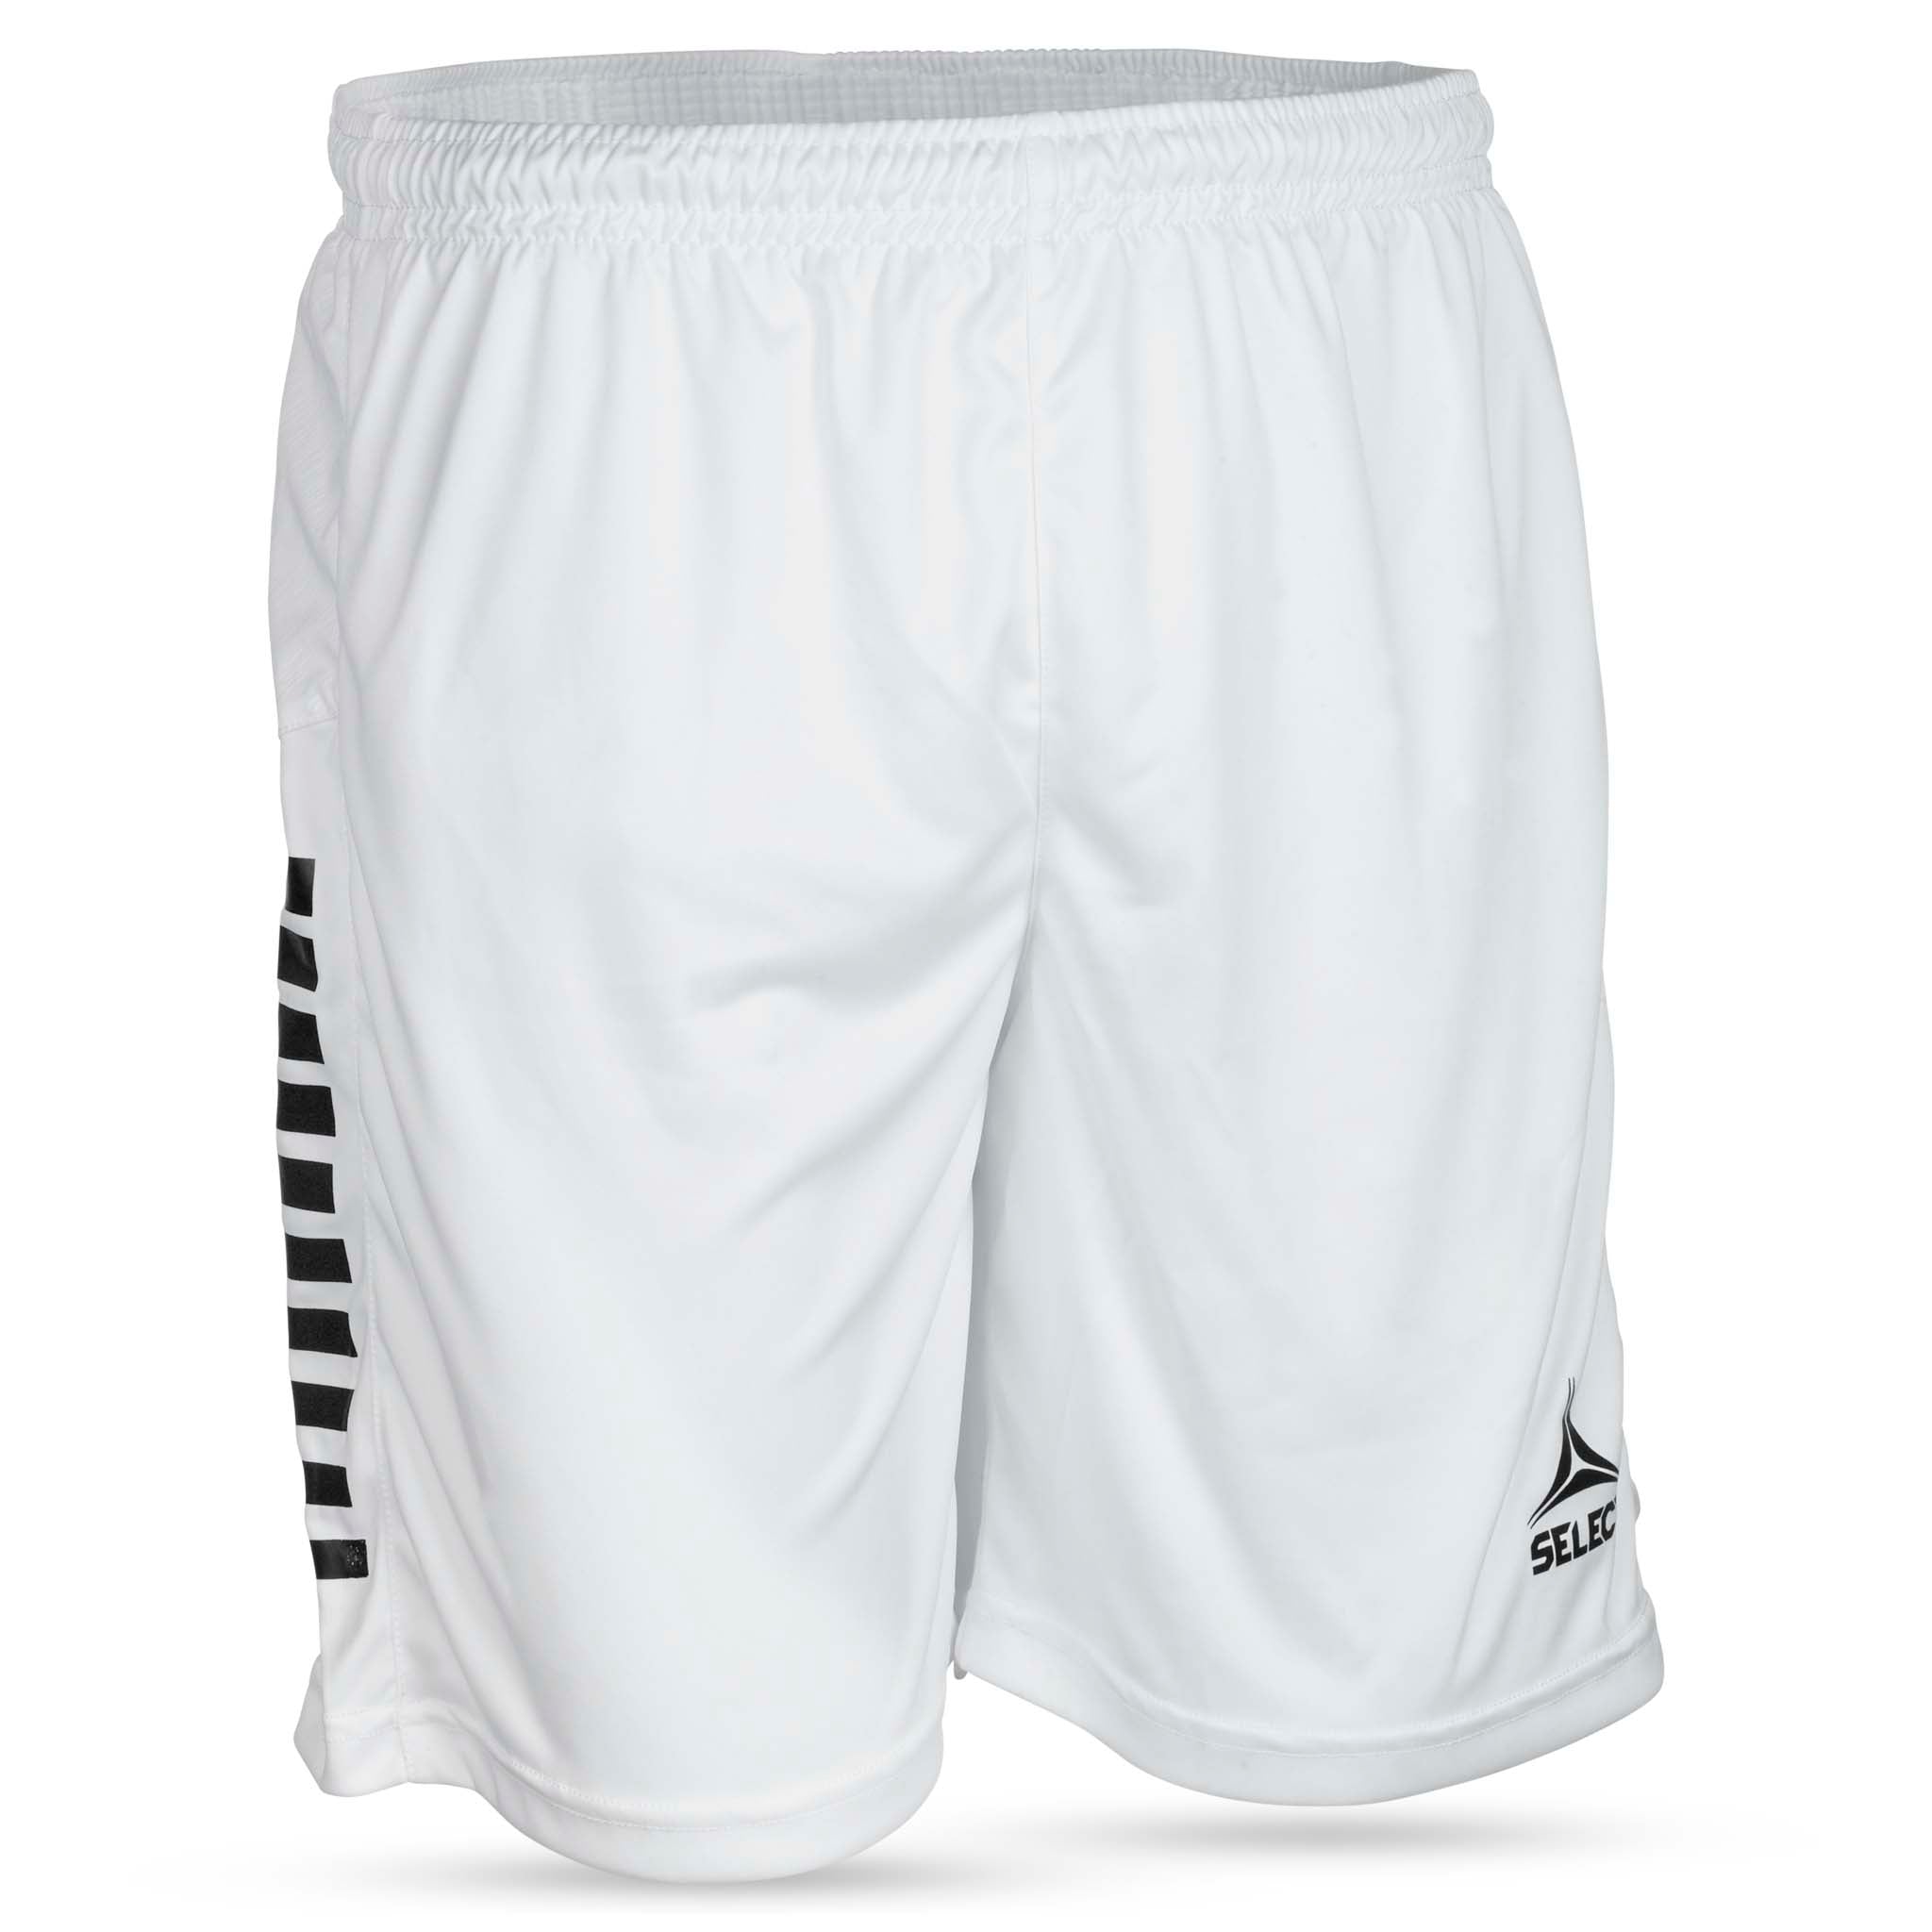 Spain Player shorts #colour_white/black